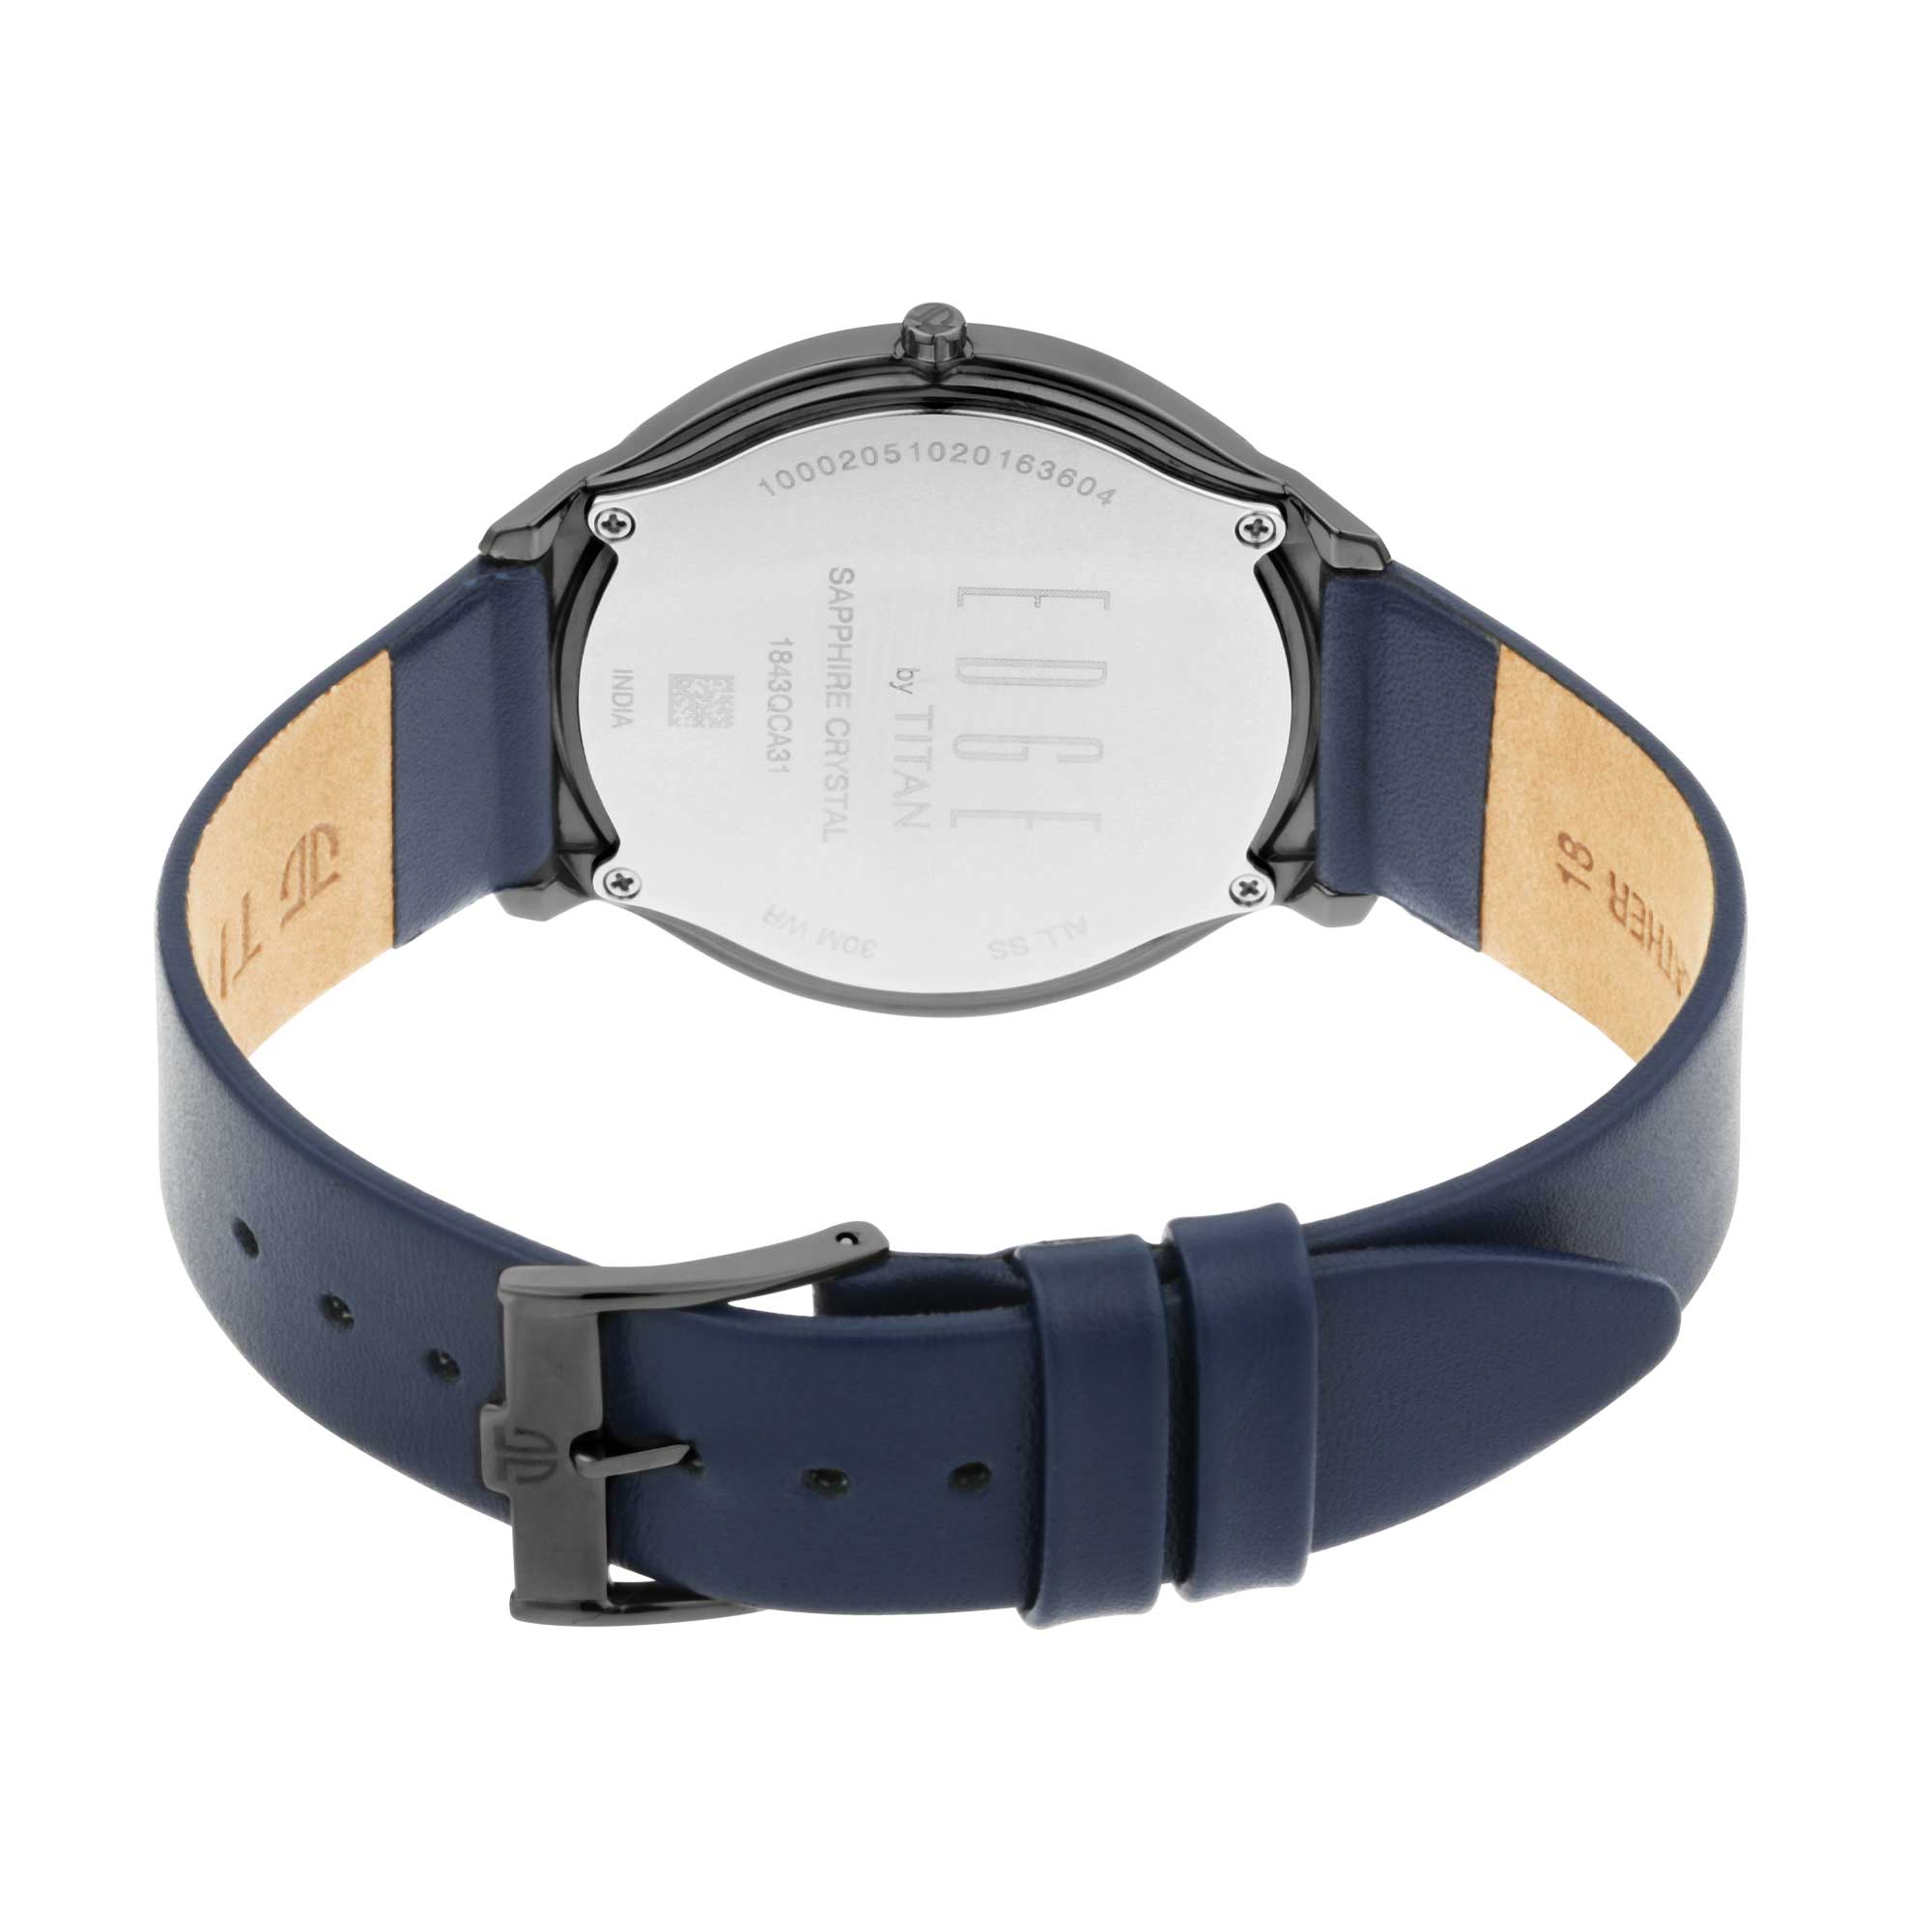 Titan Quartz Analog Blue Dial Leather Strap Watch for Men